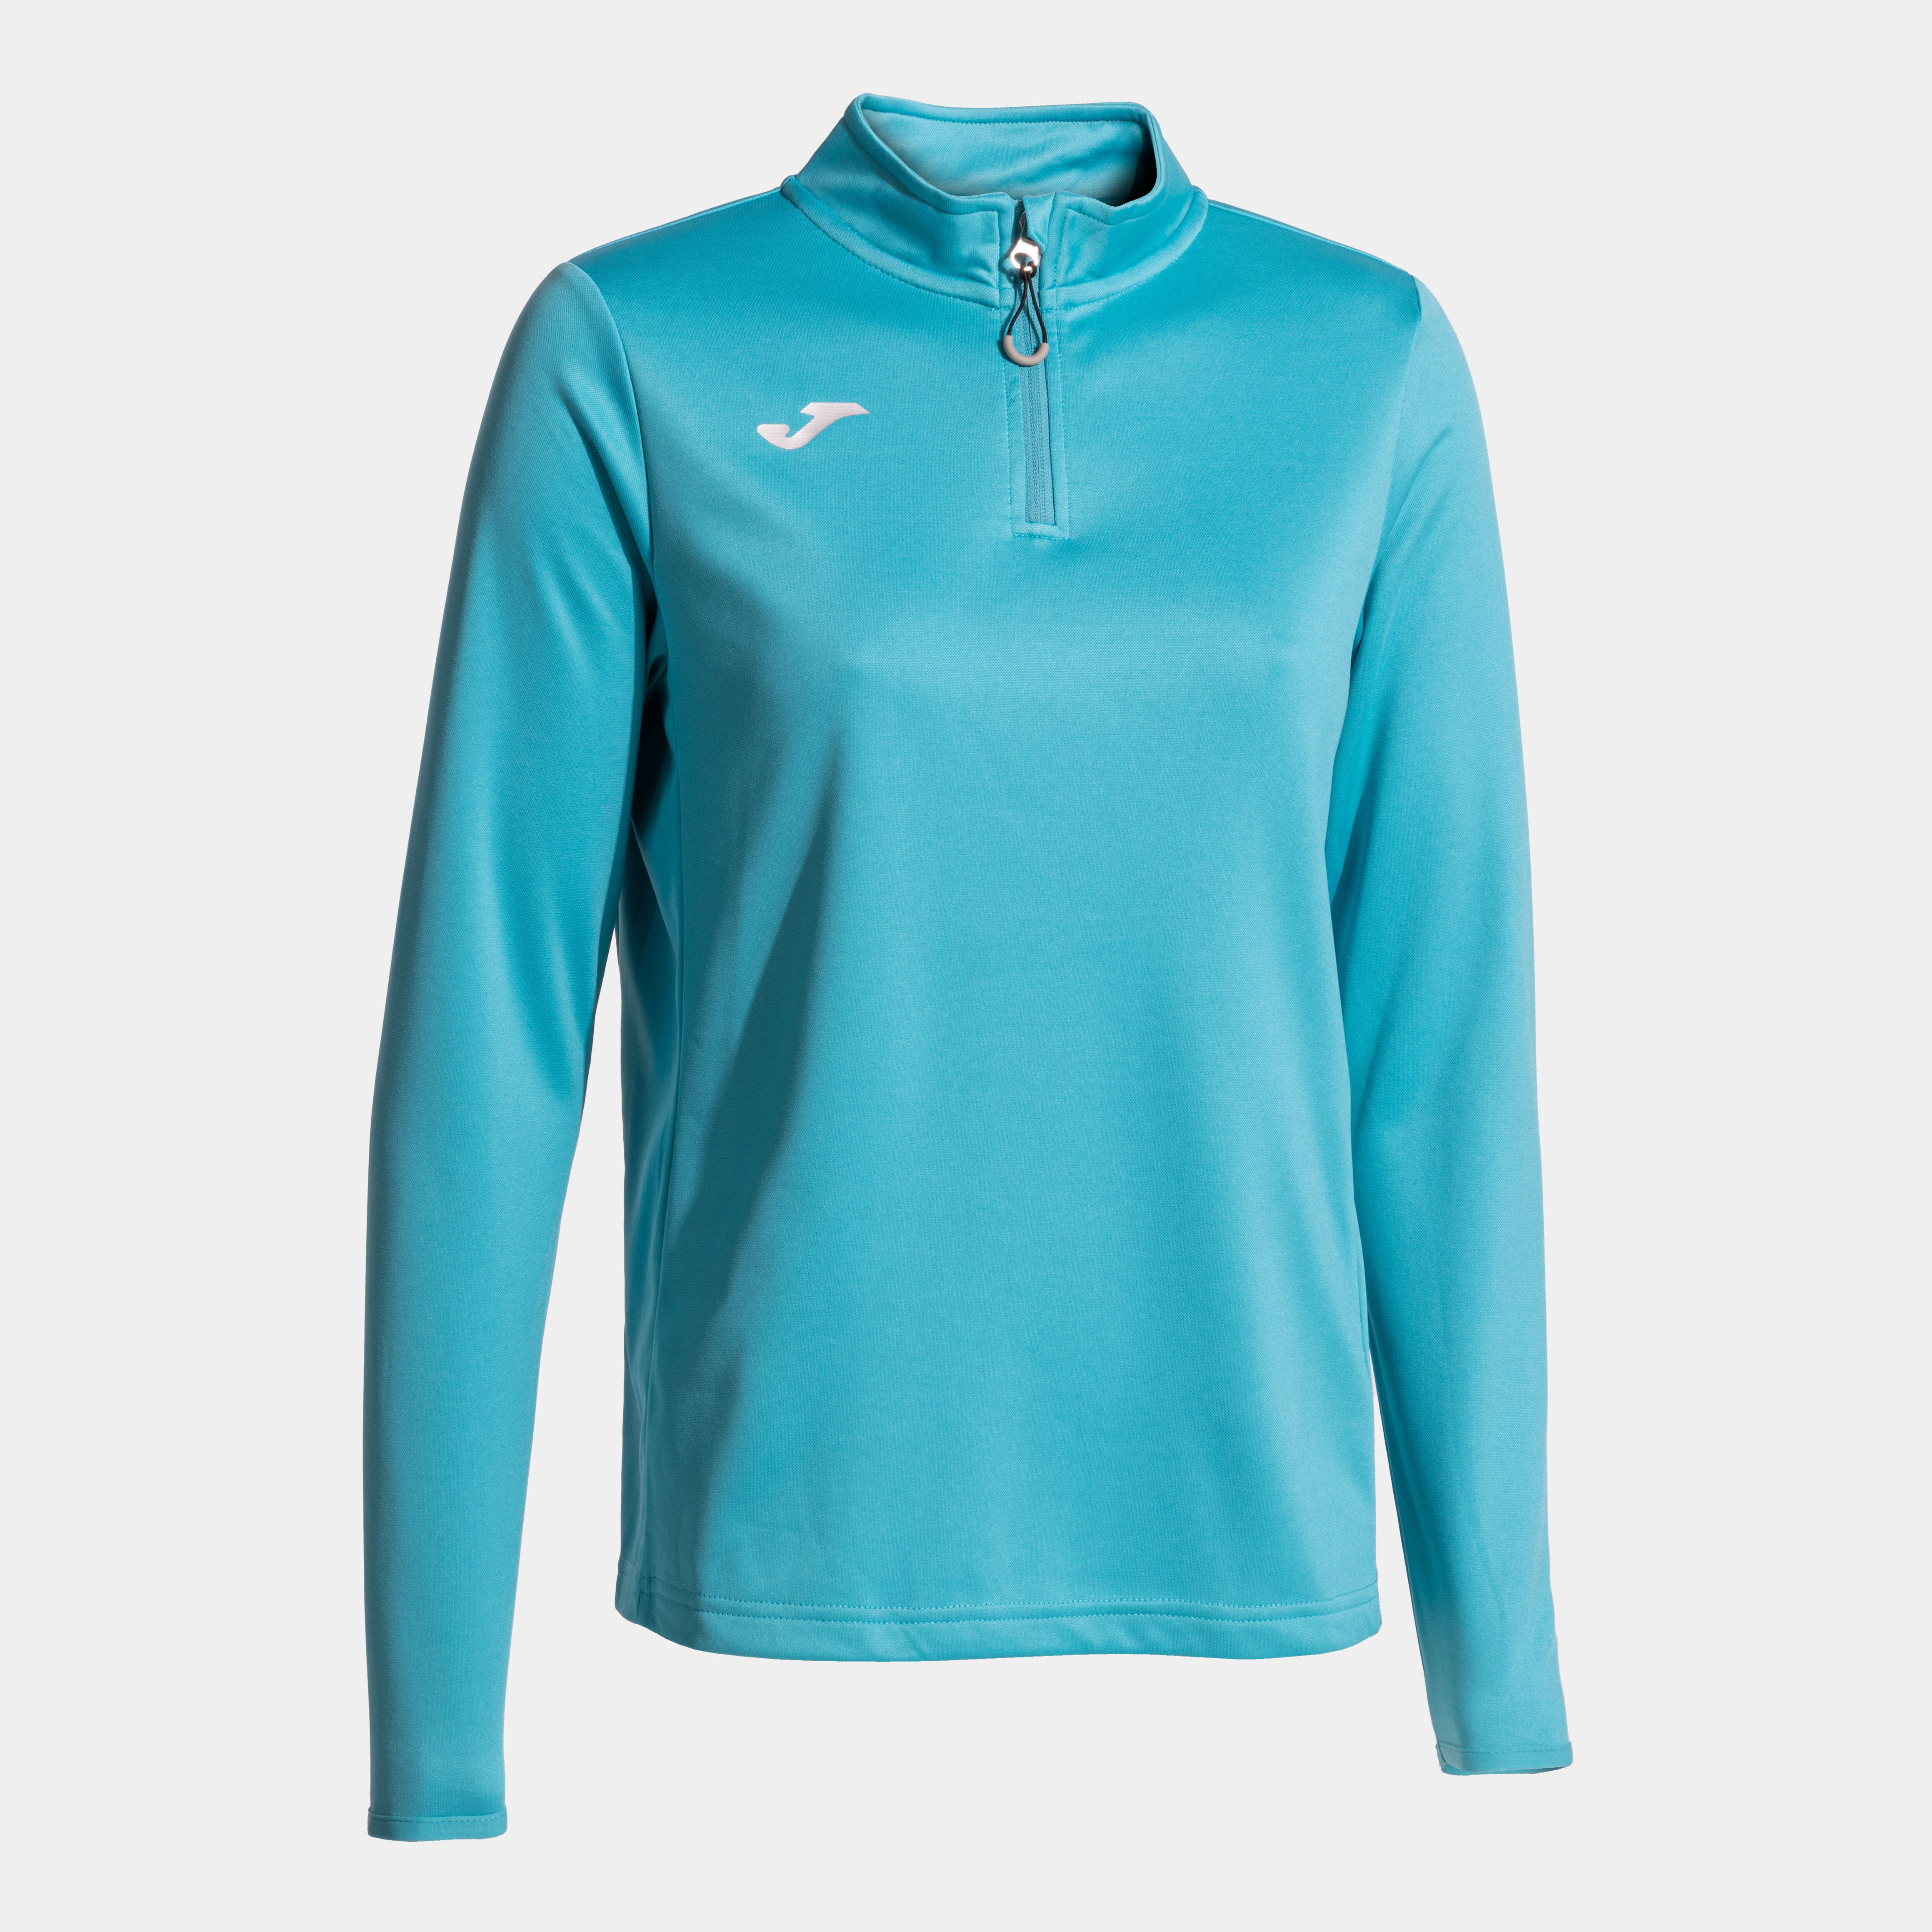 Sweat-shirt femme Running Night turquoise fluo